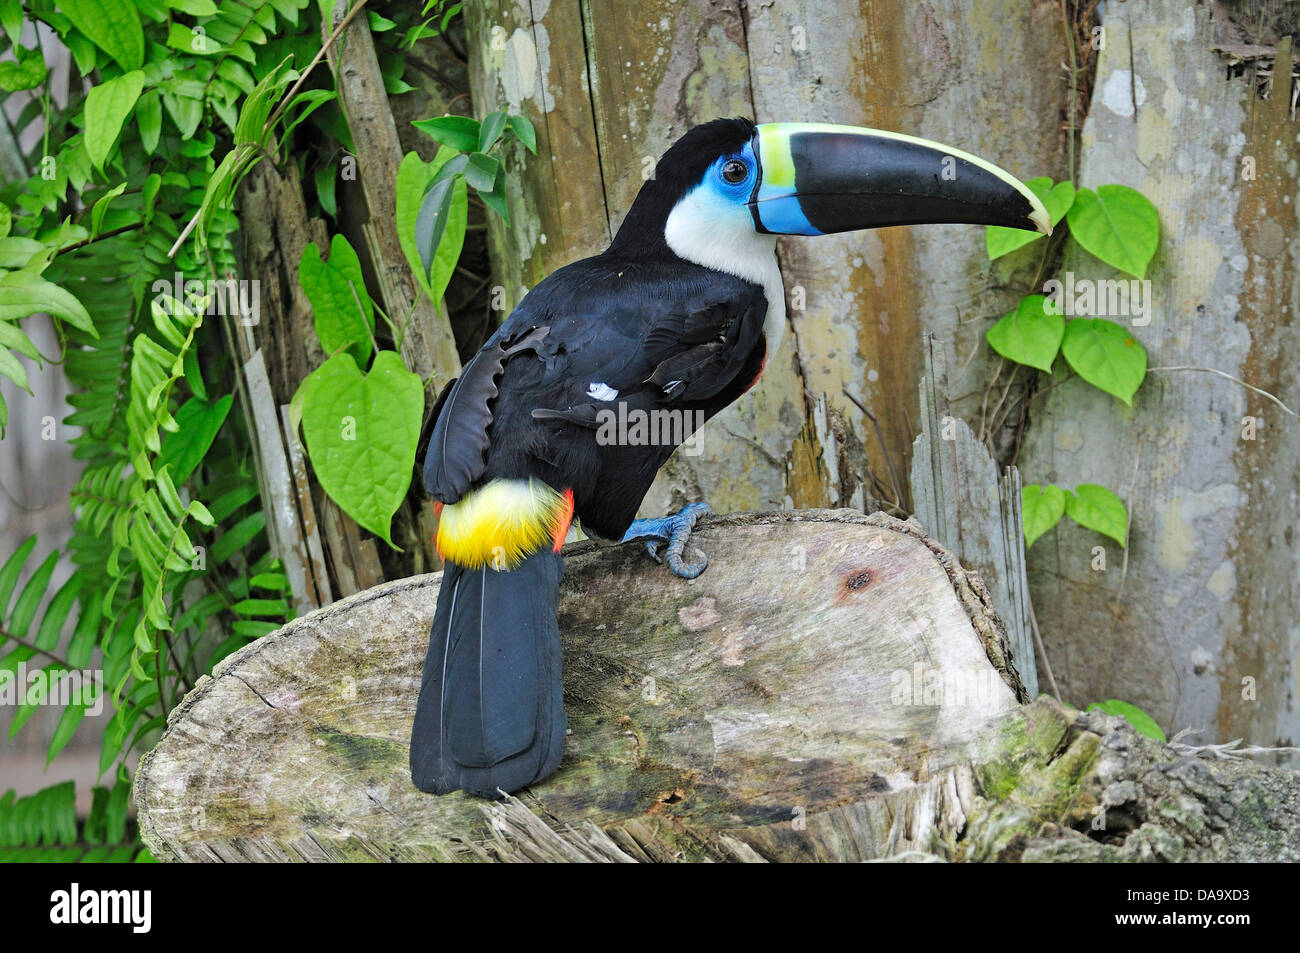 South America, Peru, Amazon, Ramphastos vitellinus, Toucan, Tucano, bird, beak, colourful, Stock Photo